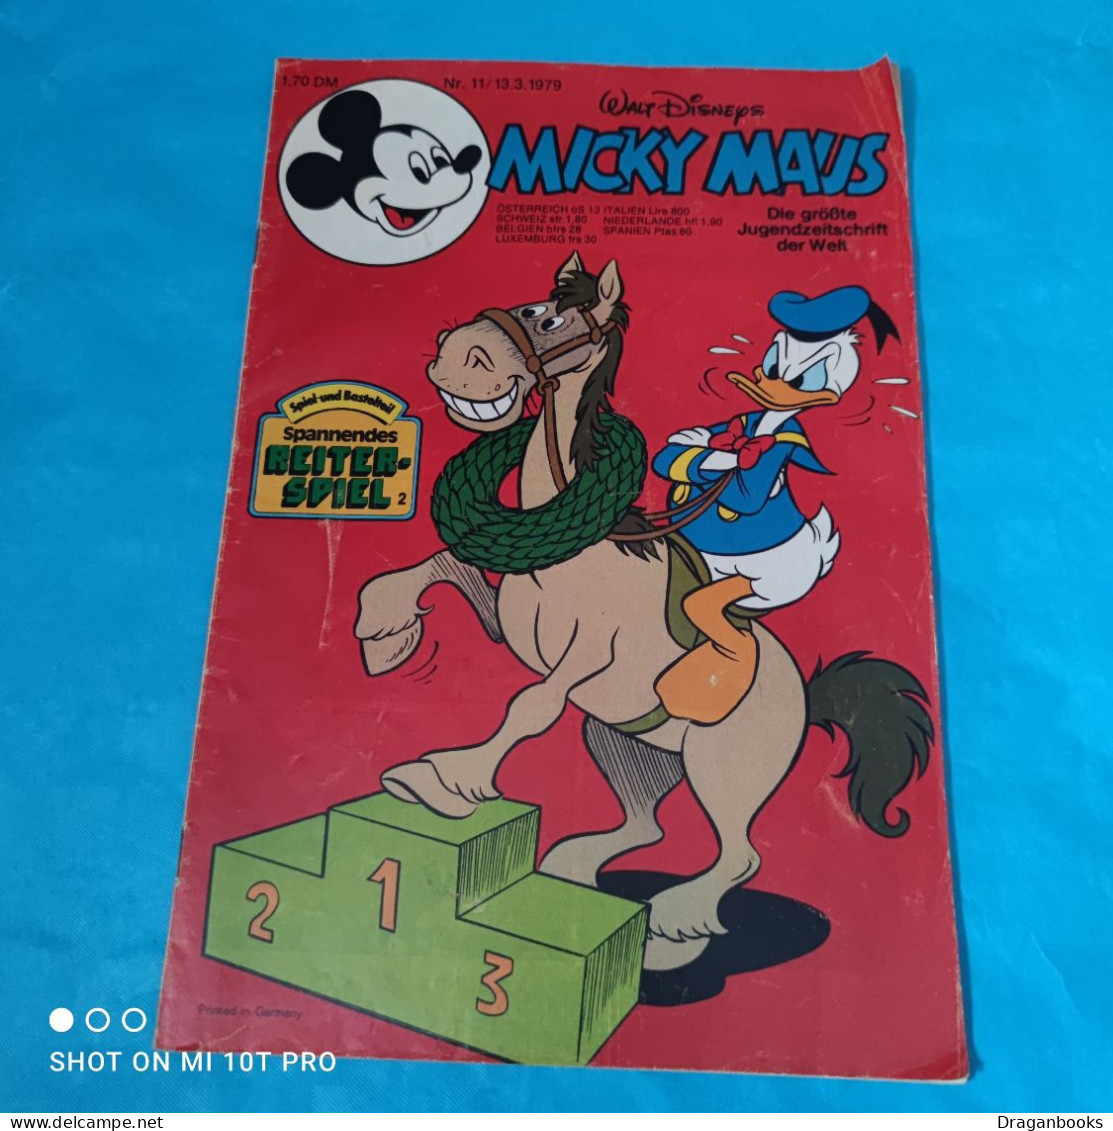 Micky Maus Nr. 11 - 13.3.1979 - Walt Disney